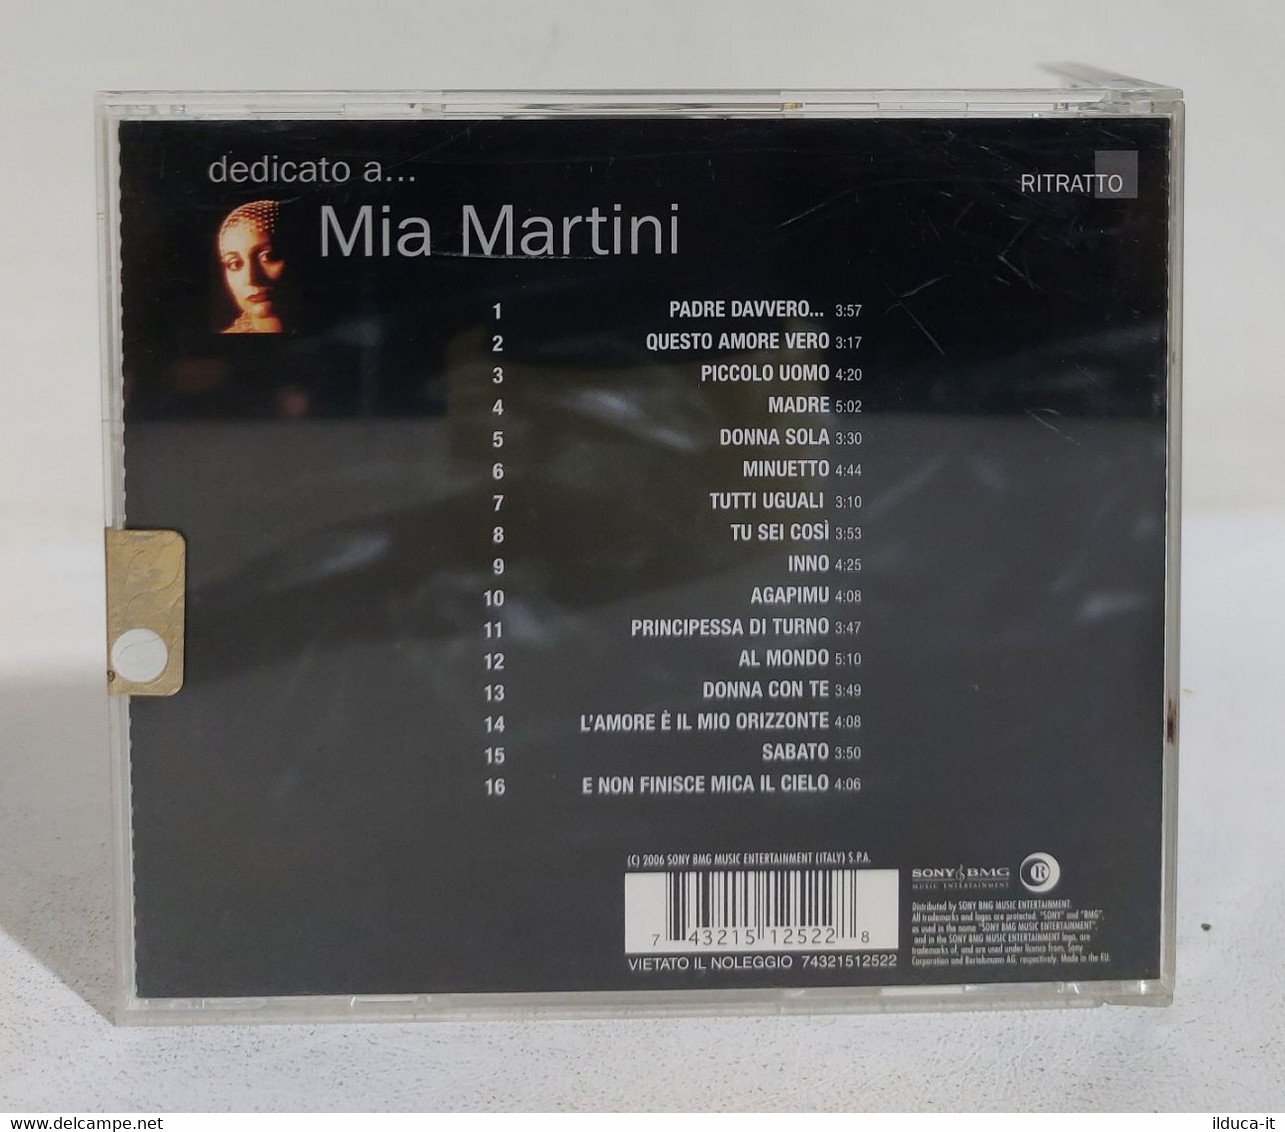 I107935 CD - MIA MARTINI - Dedicato A... - Sony 2006 - Other - Italian Music